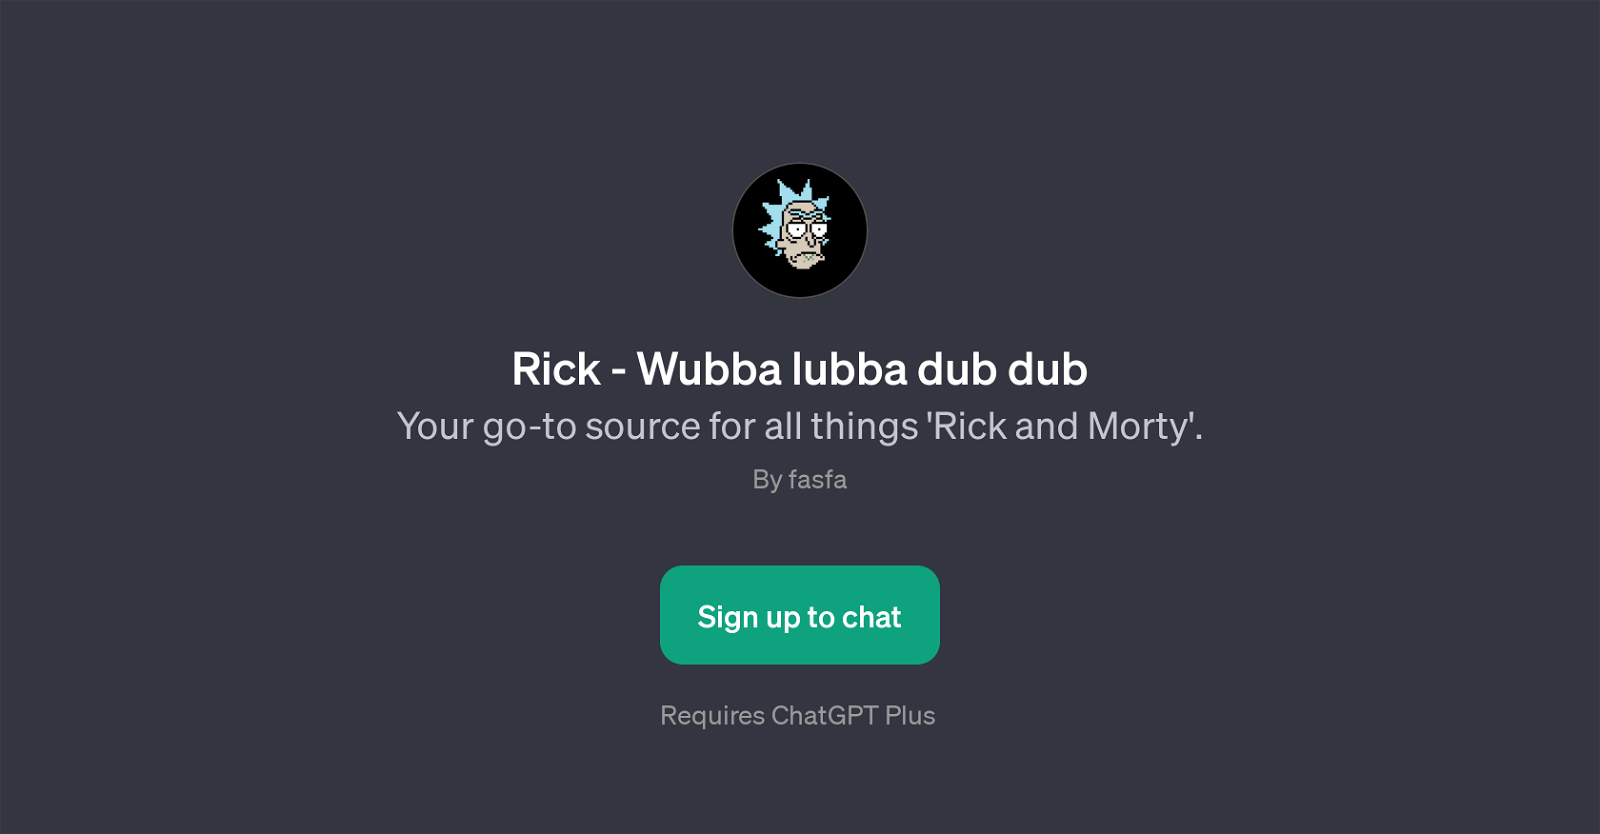 Rick - Wubba lubba dub dub website